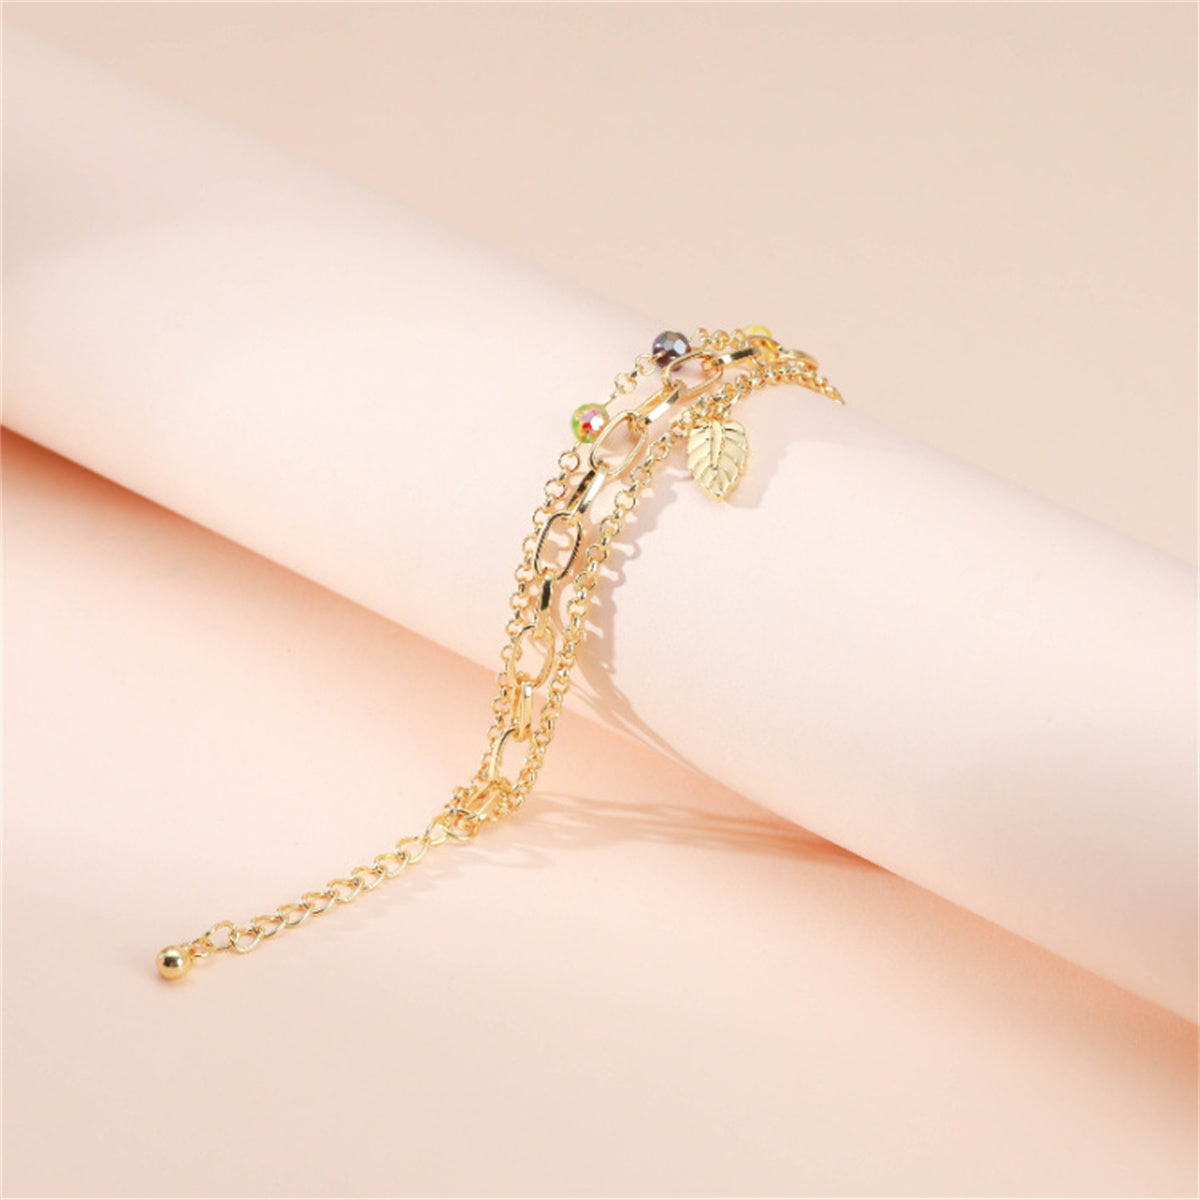 Acrylic & 18K Gold-Plated Leaf Charm Layered Bracelet